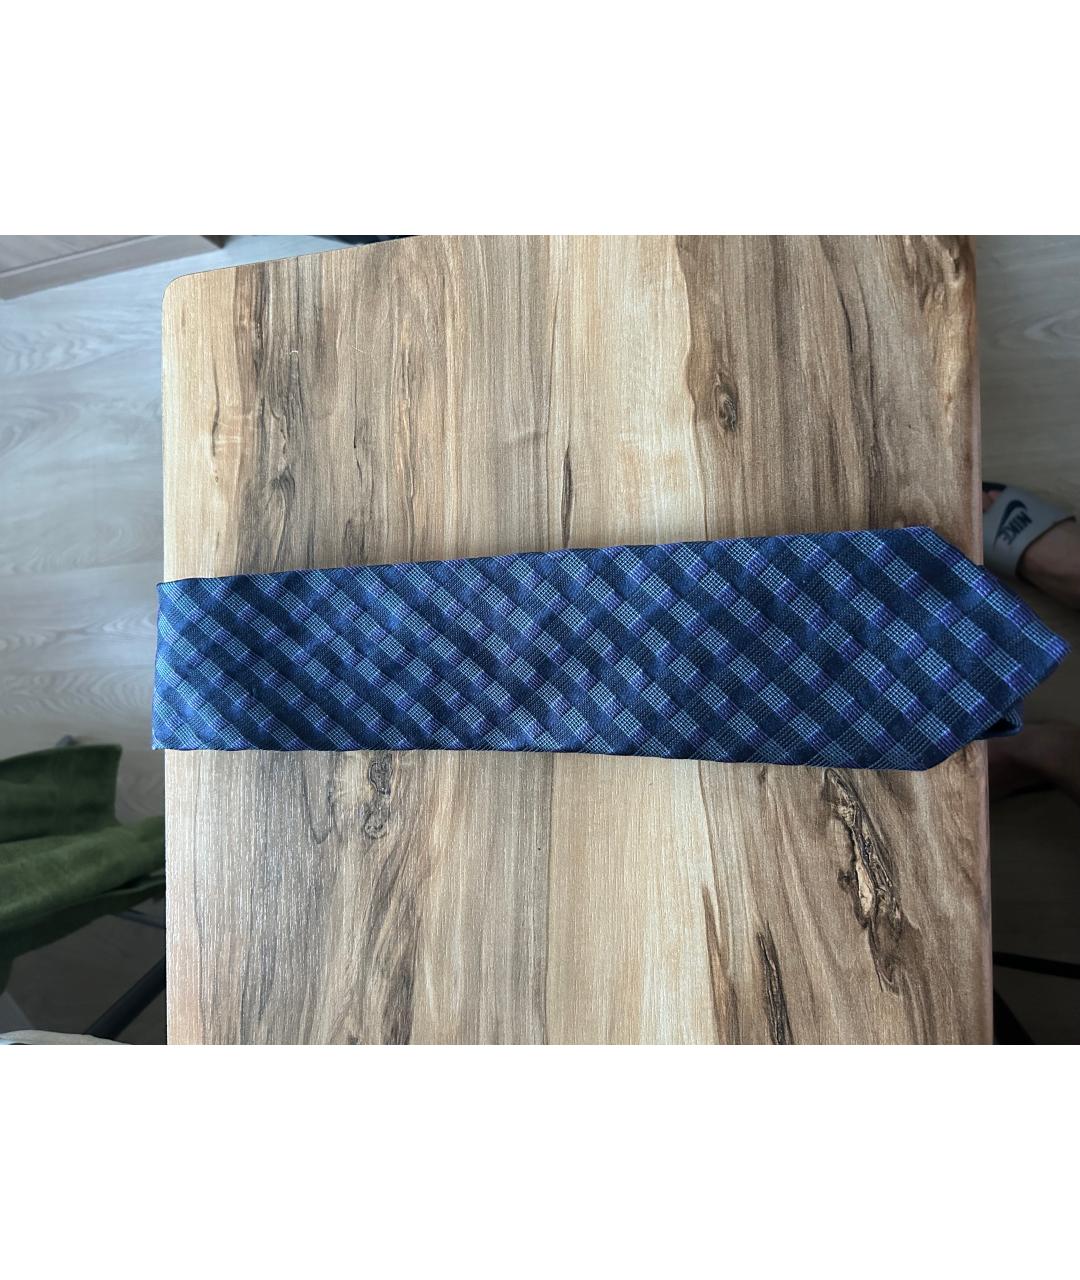 ZILLI Синий шелковый галстук, фото 3